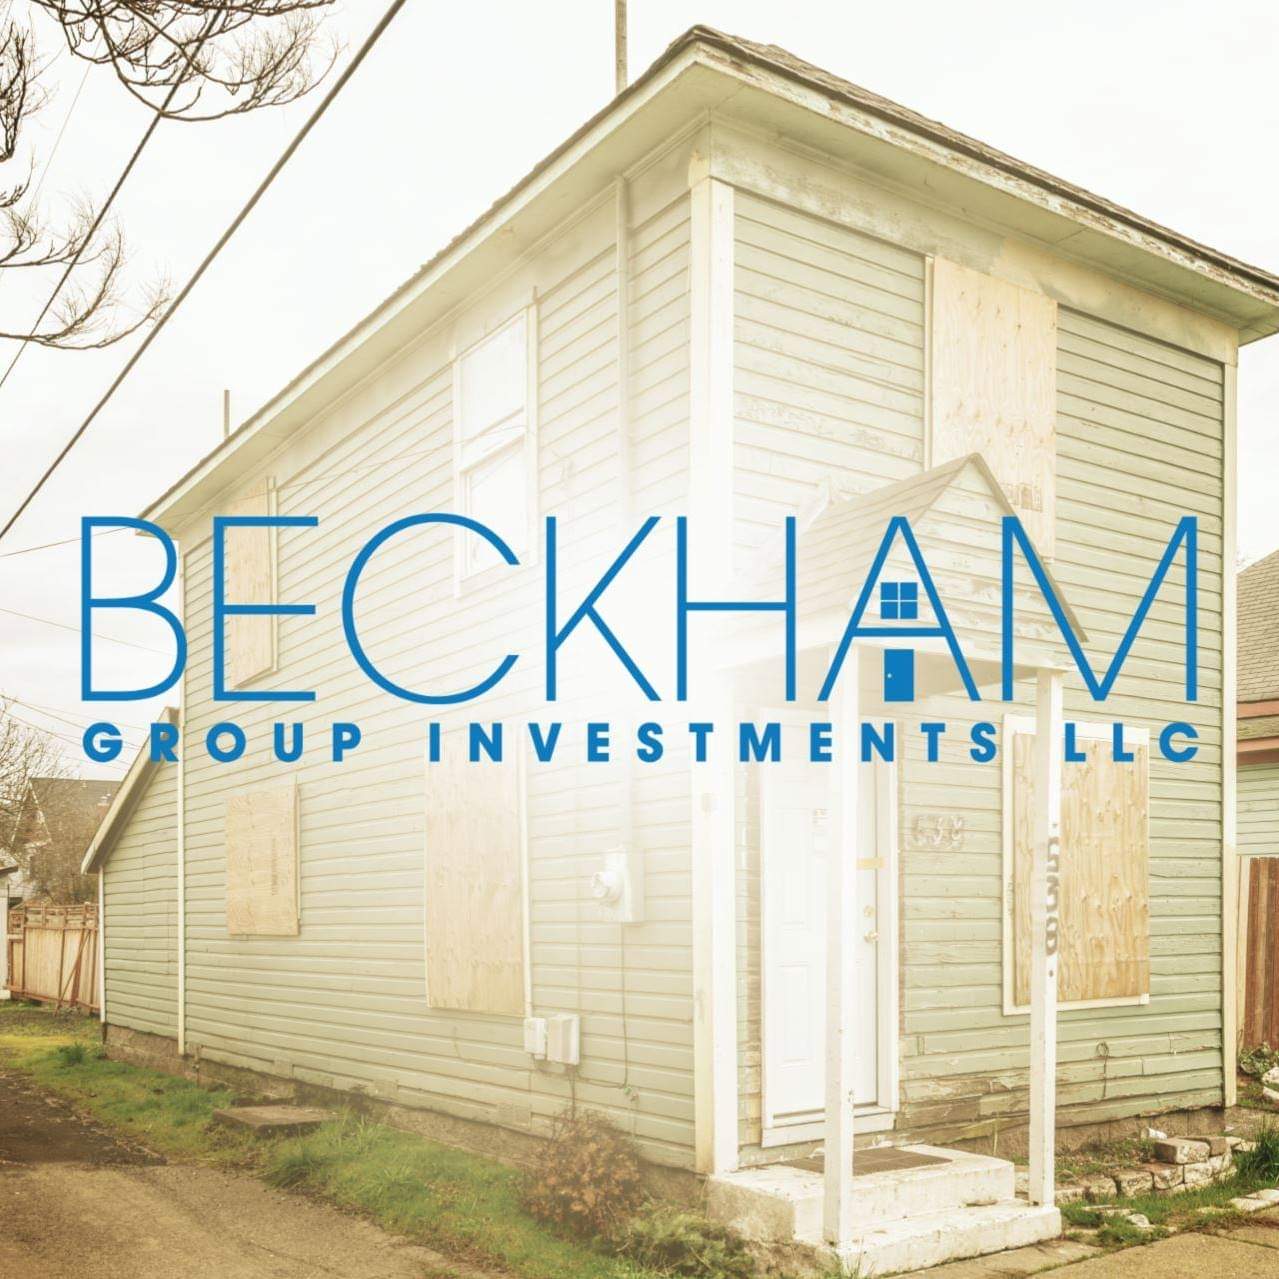 Beckham Group Investments LLC